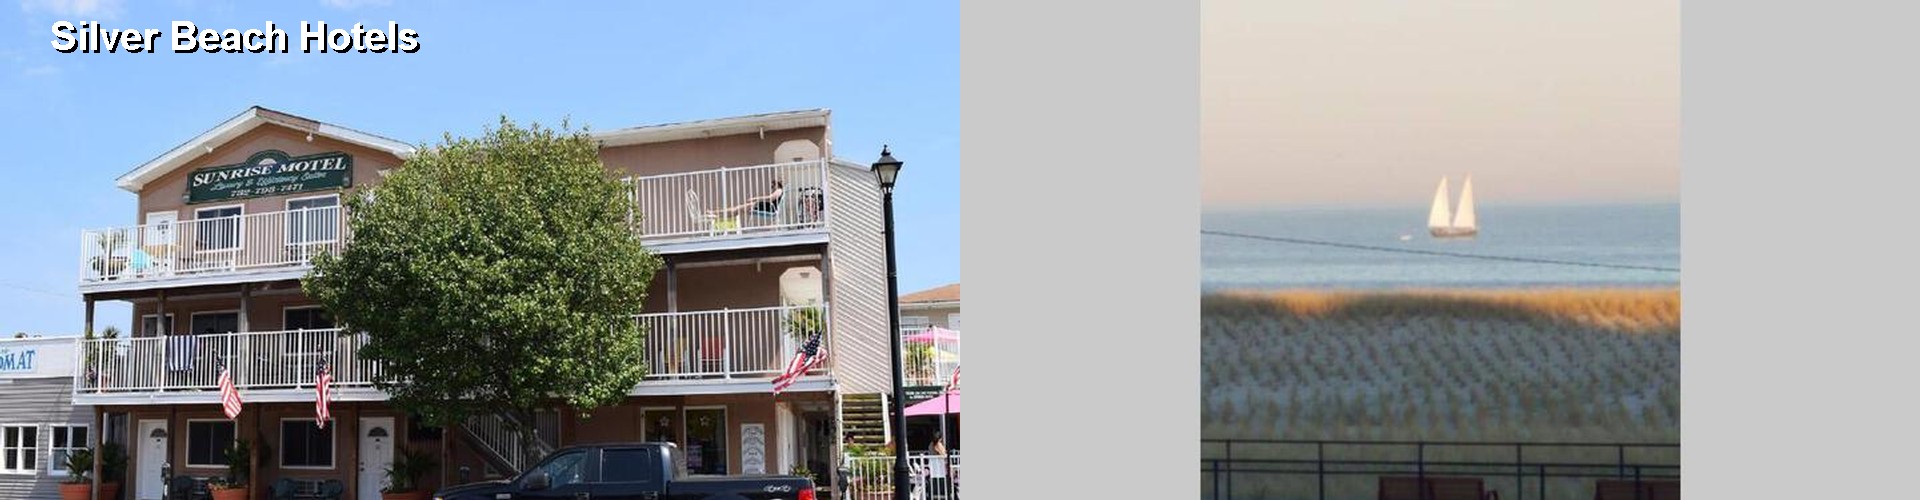 2 Best Hotels near Silver Beach